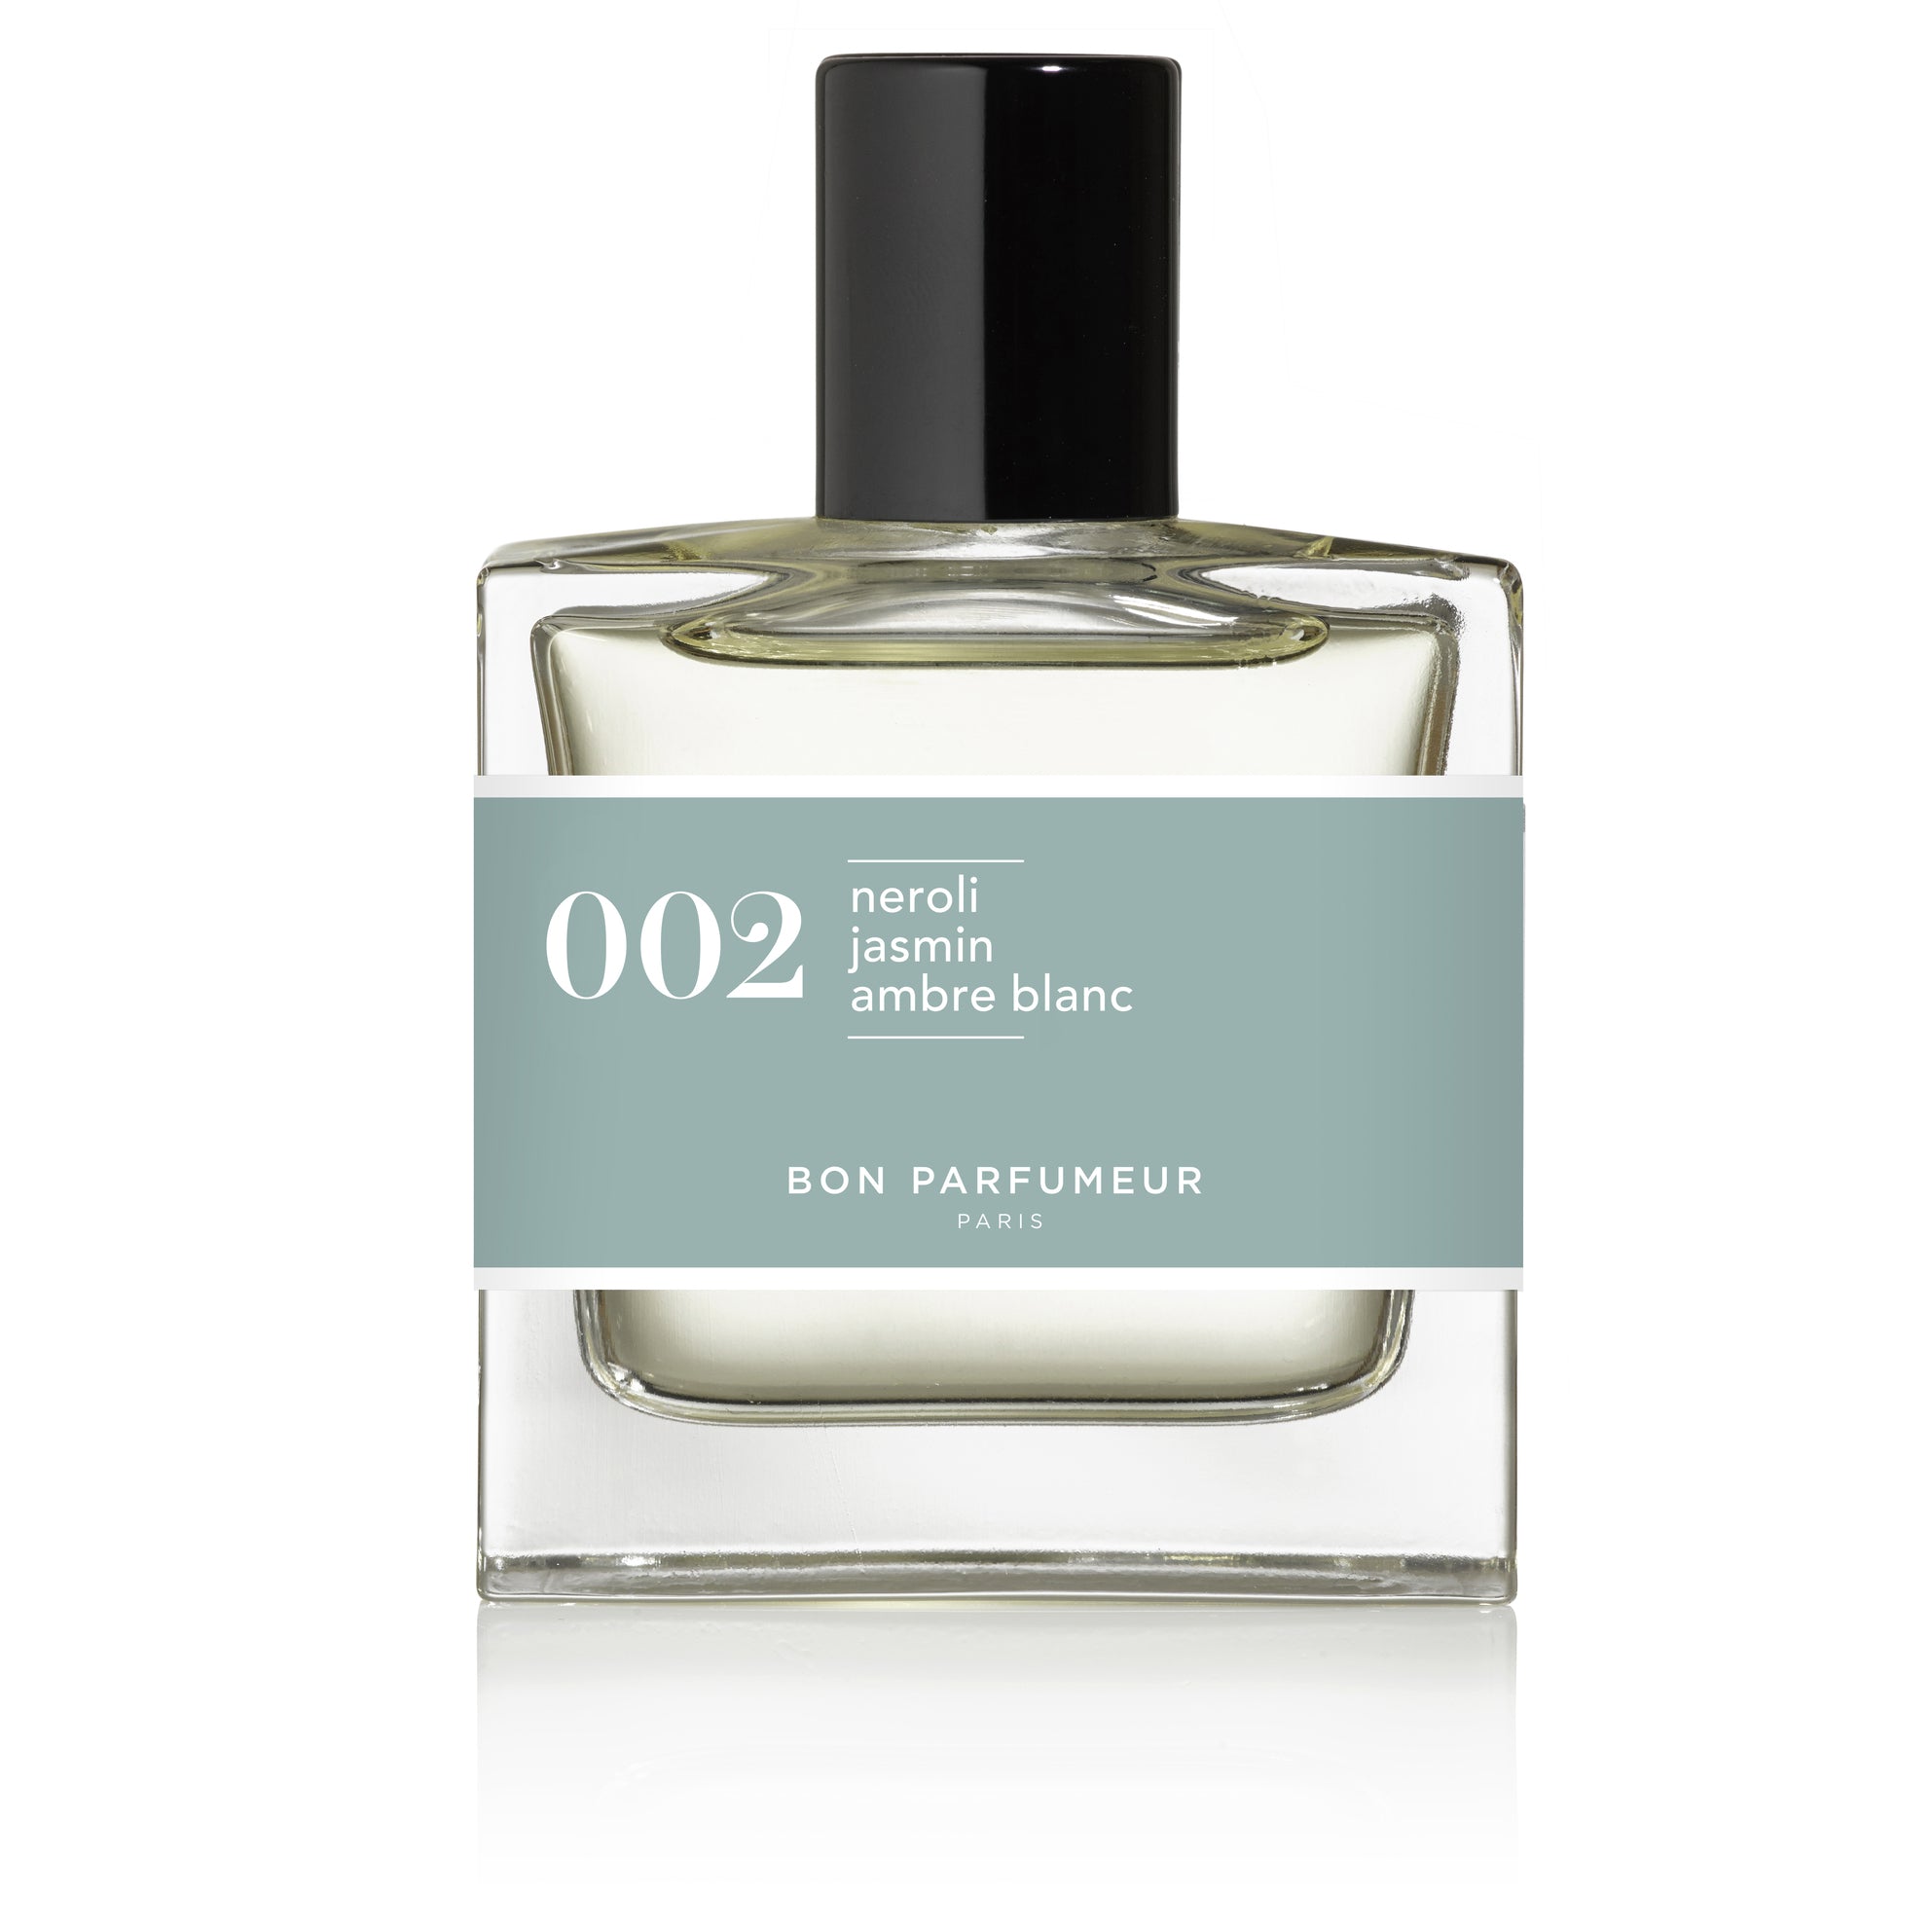 Bon Parfumeur - Les Classiques 002 - Danae Profumeria